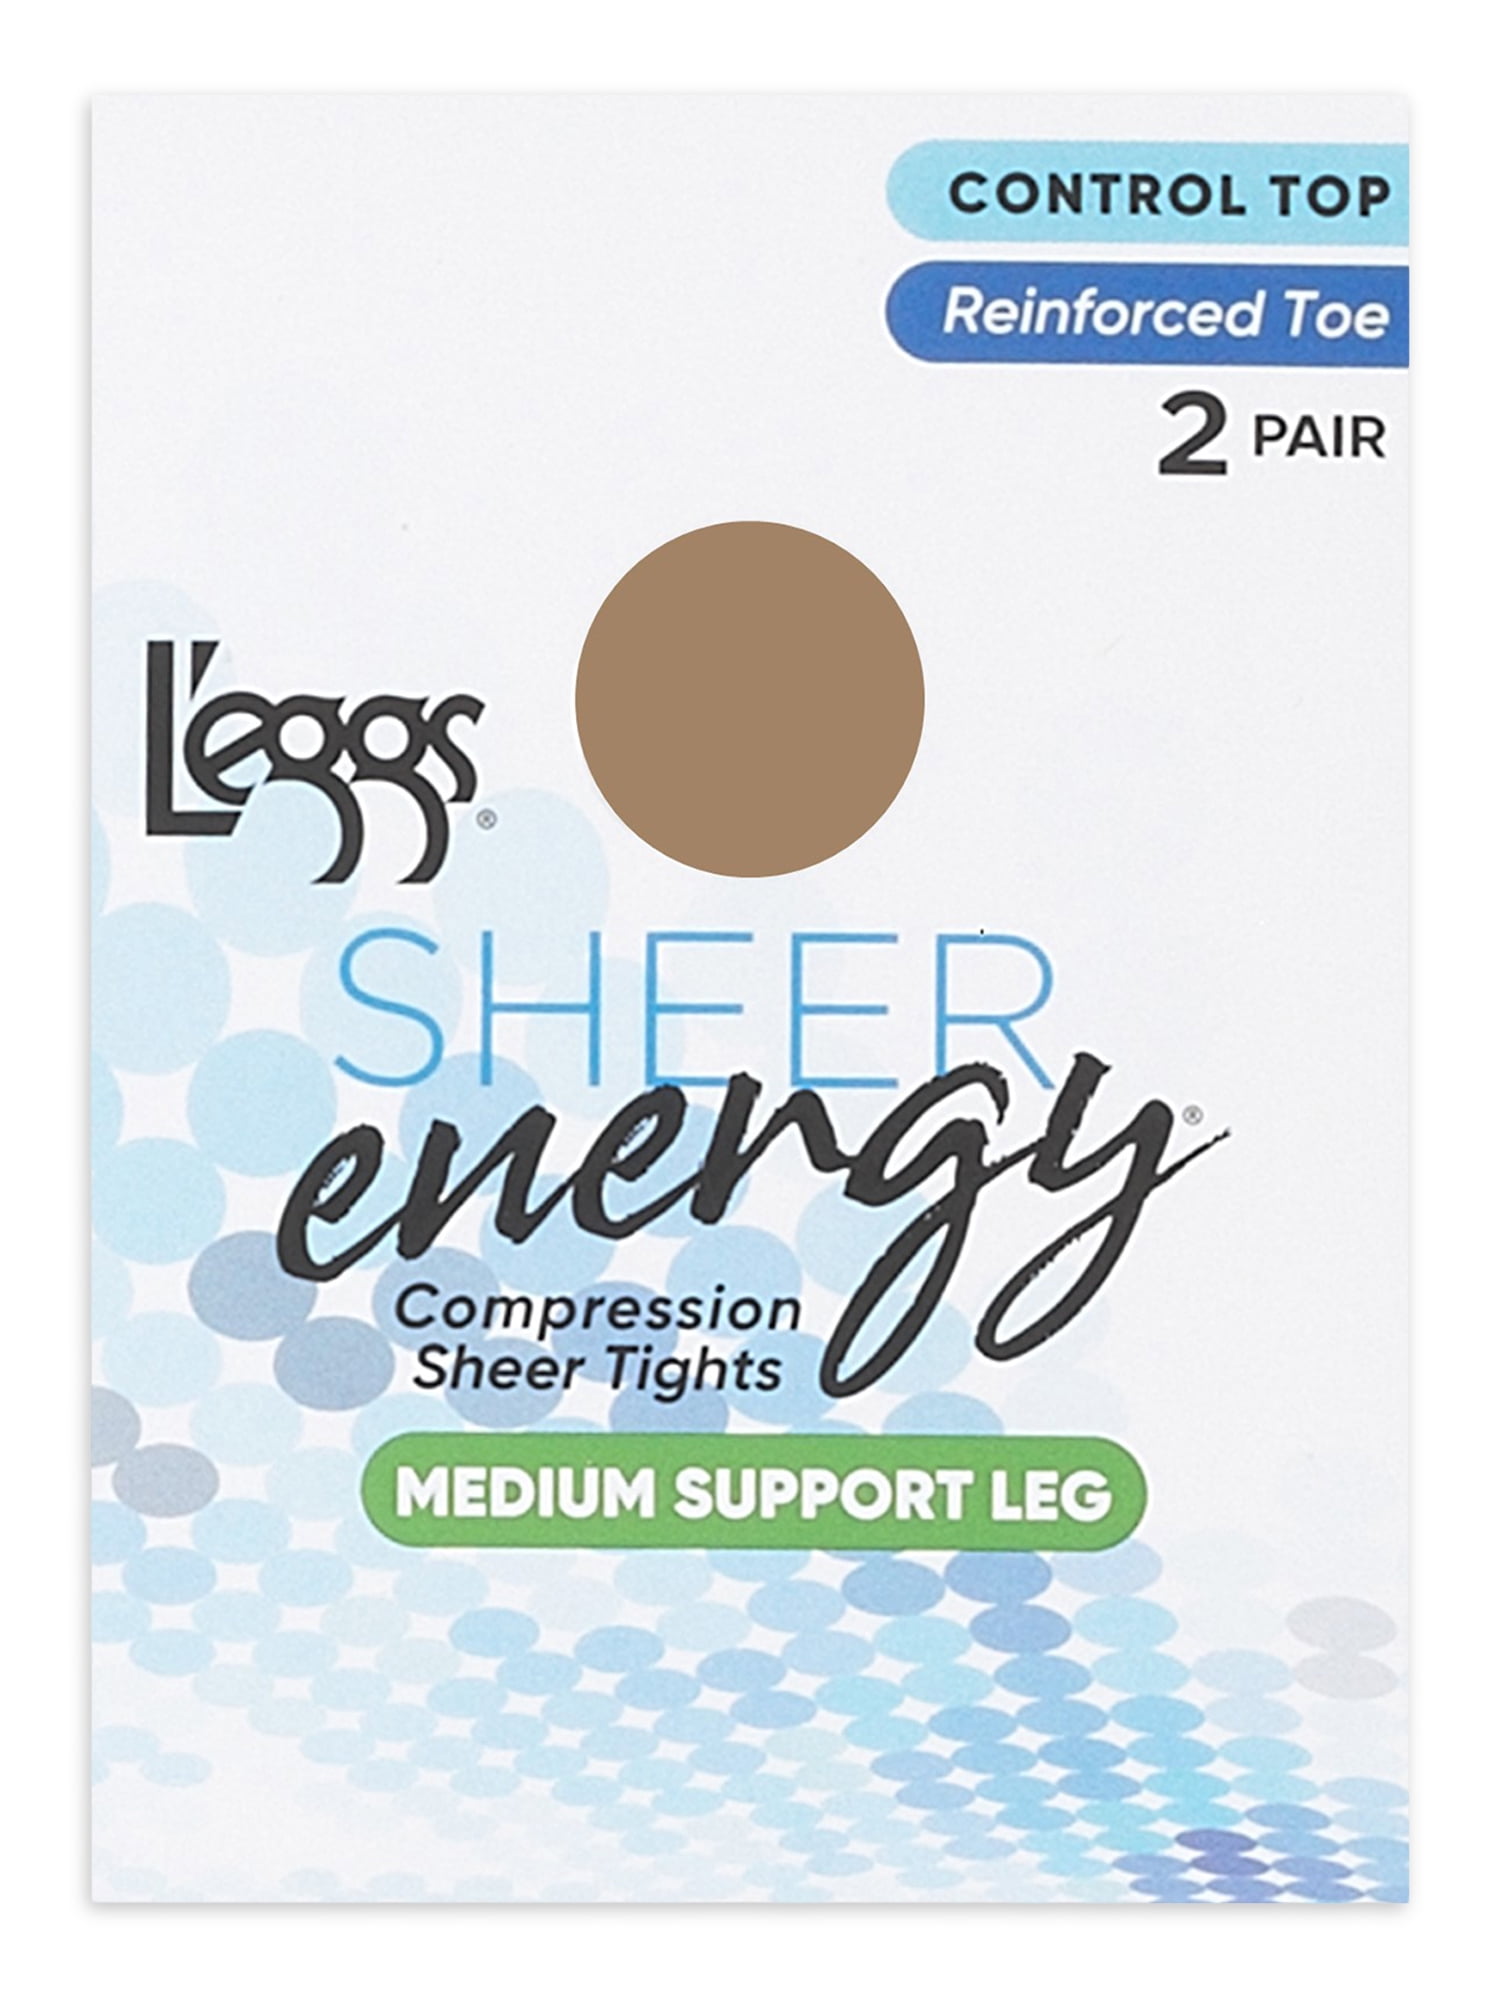 L'eggs Sheer Energy Medium Leg Support Control Top Reinforced Toe Tights, 2  Pair 